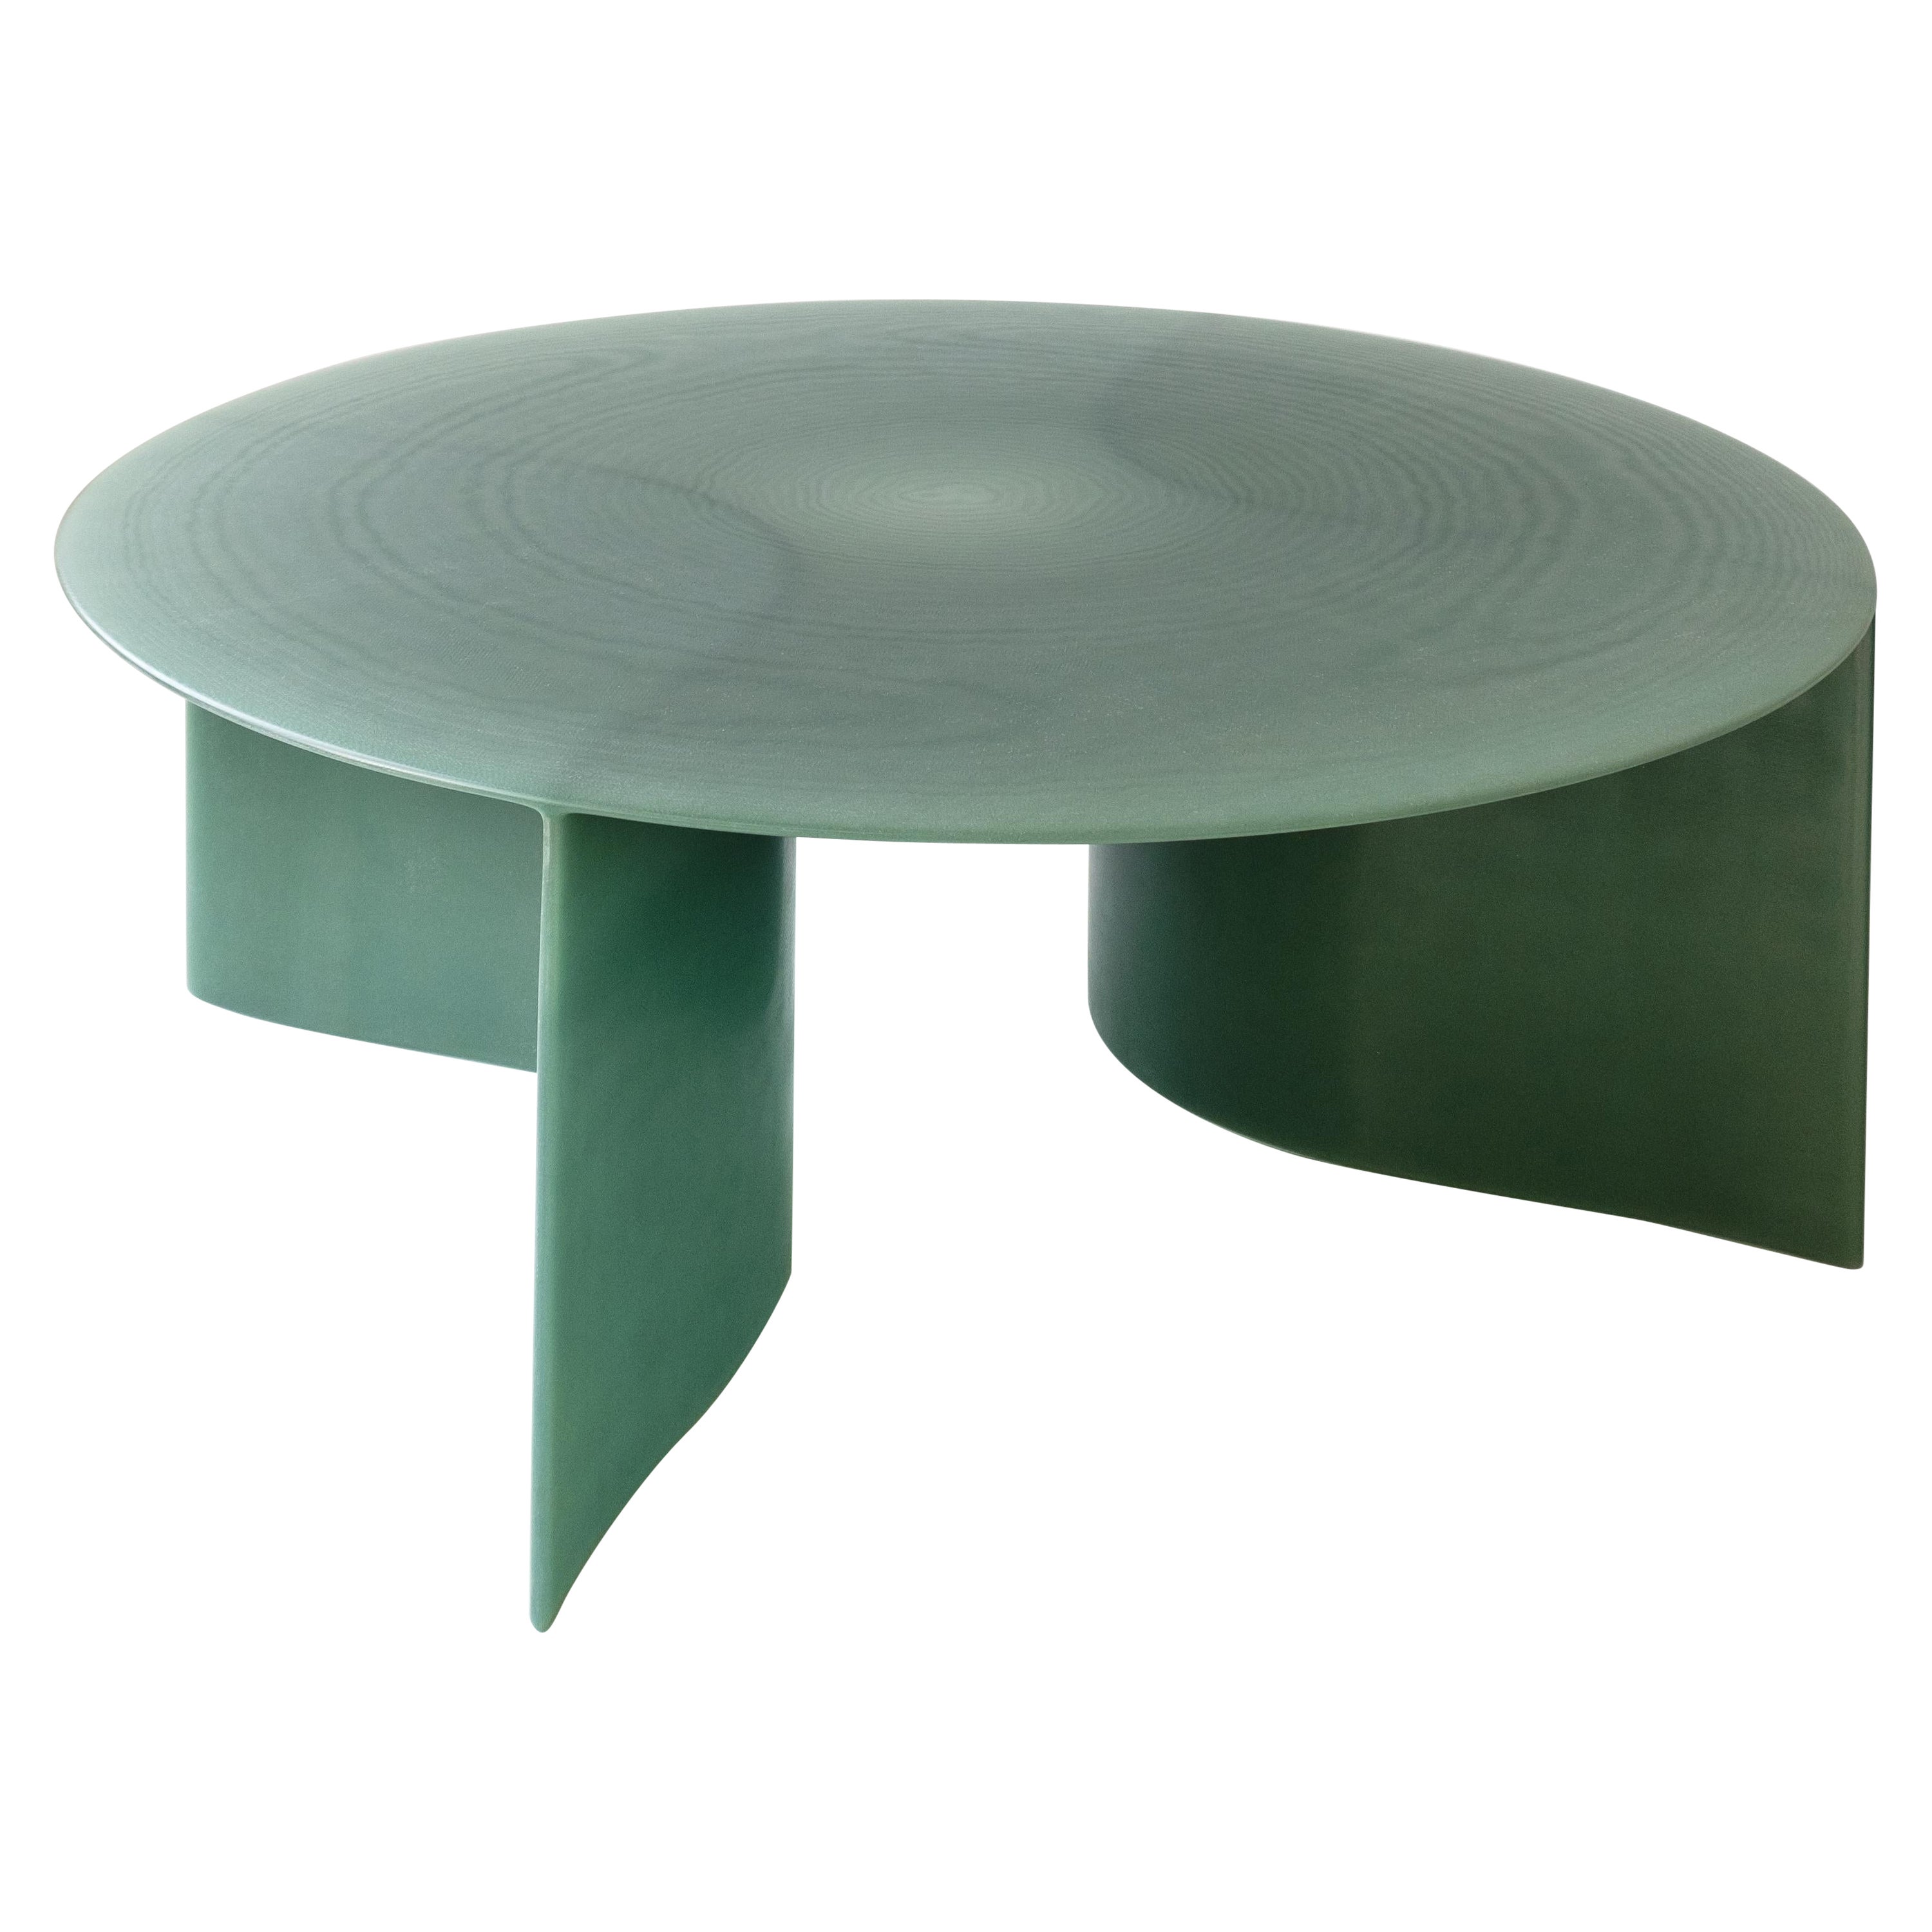 Table basse ronde contemporaine en fibre de verre verte, New Wave, 100 cm, de Lukas Cober